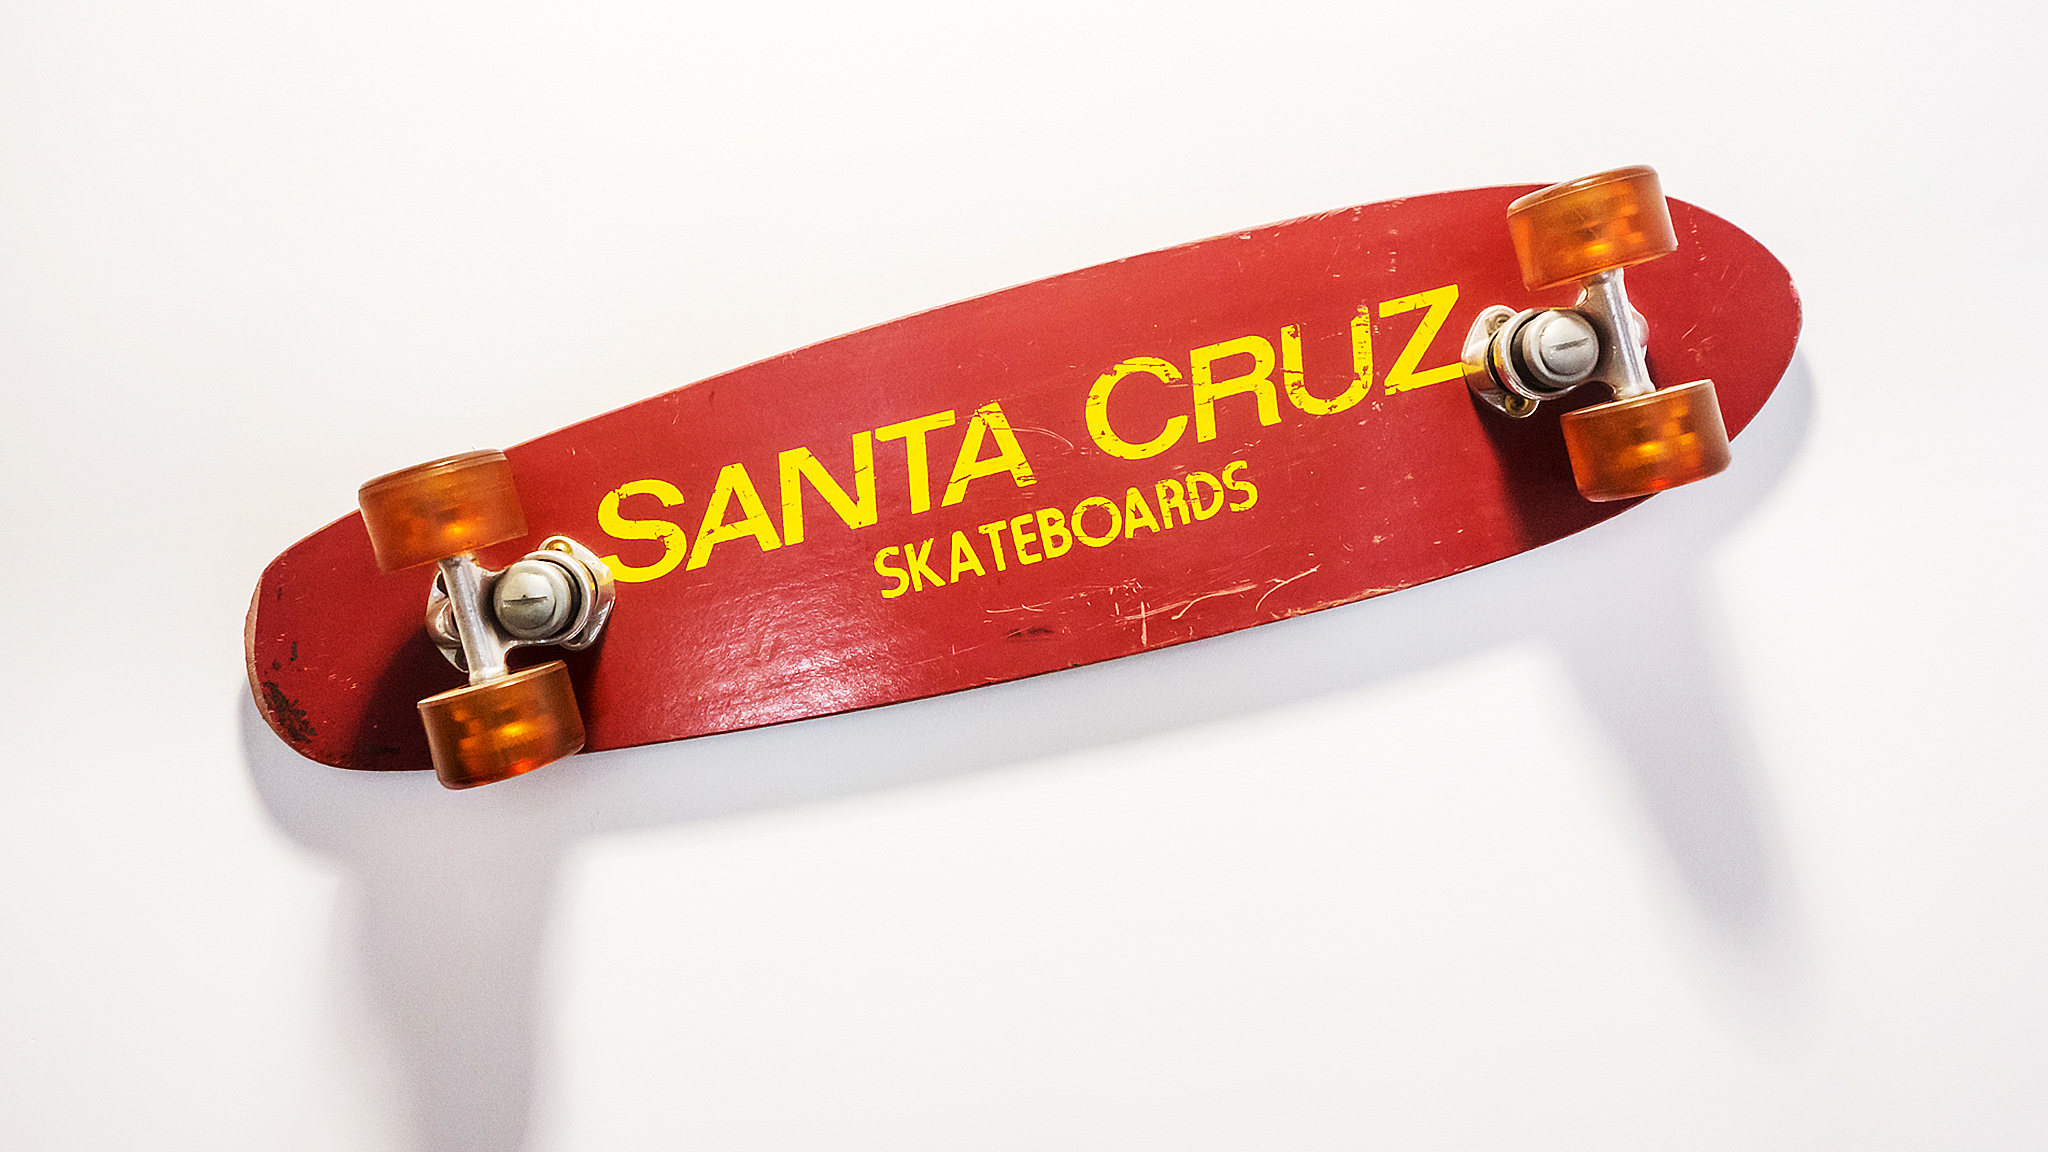 The Santa Cruz Skateboard